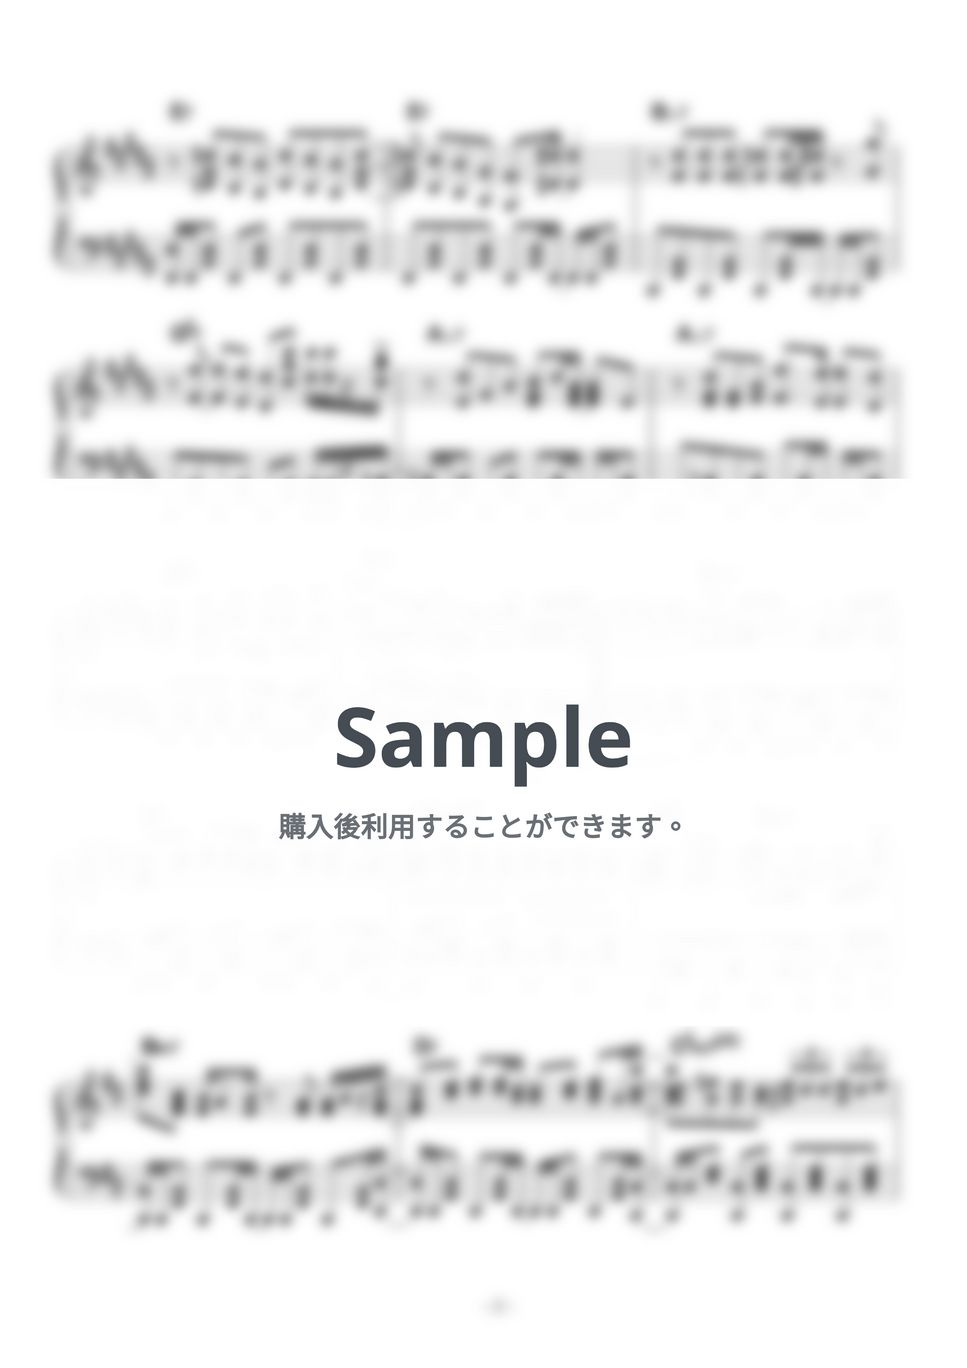 Royal Scandal - チェシャーゲーム (奏音69/ピアノソロ/コード有/royalscandal) by CAFUNE-かふね-